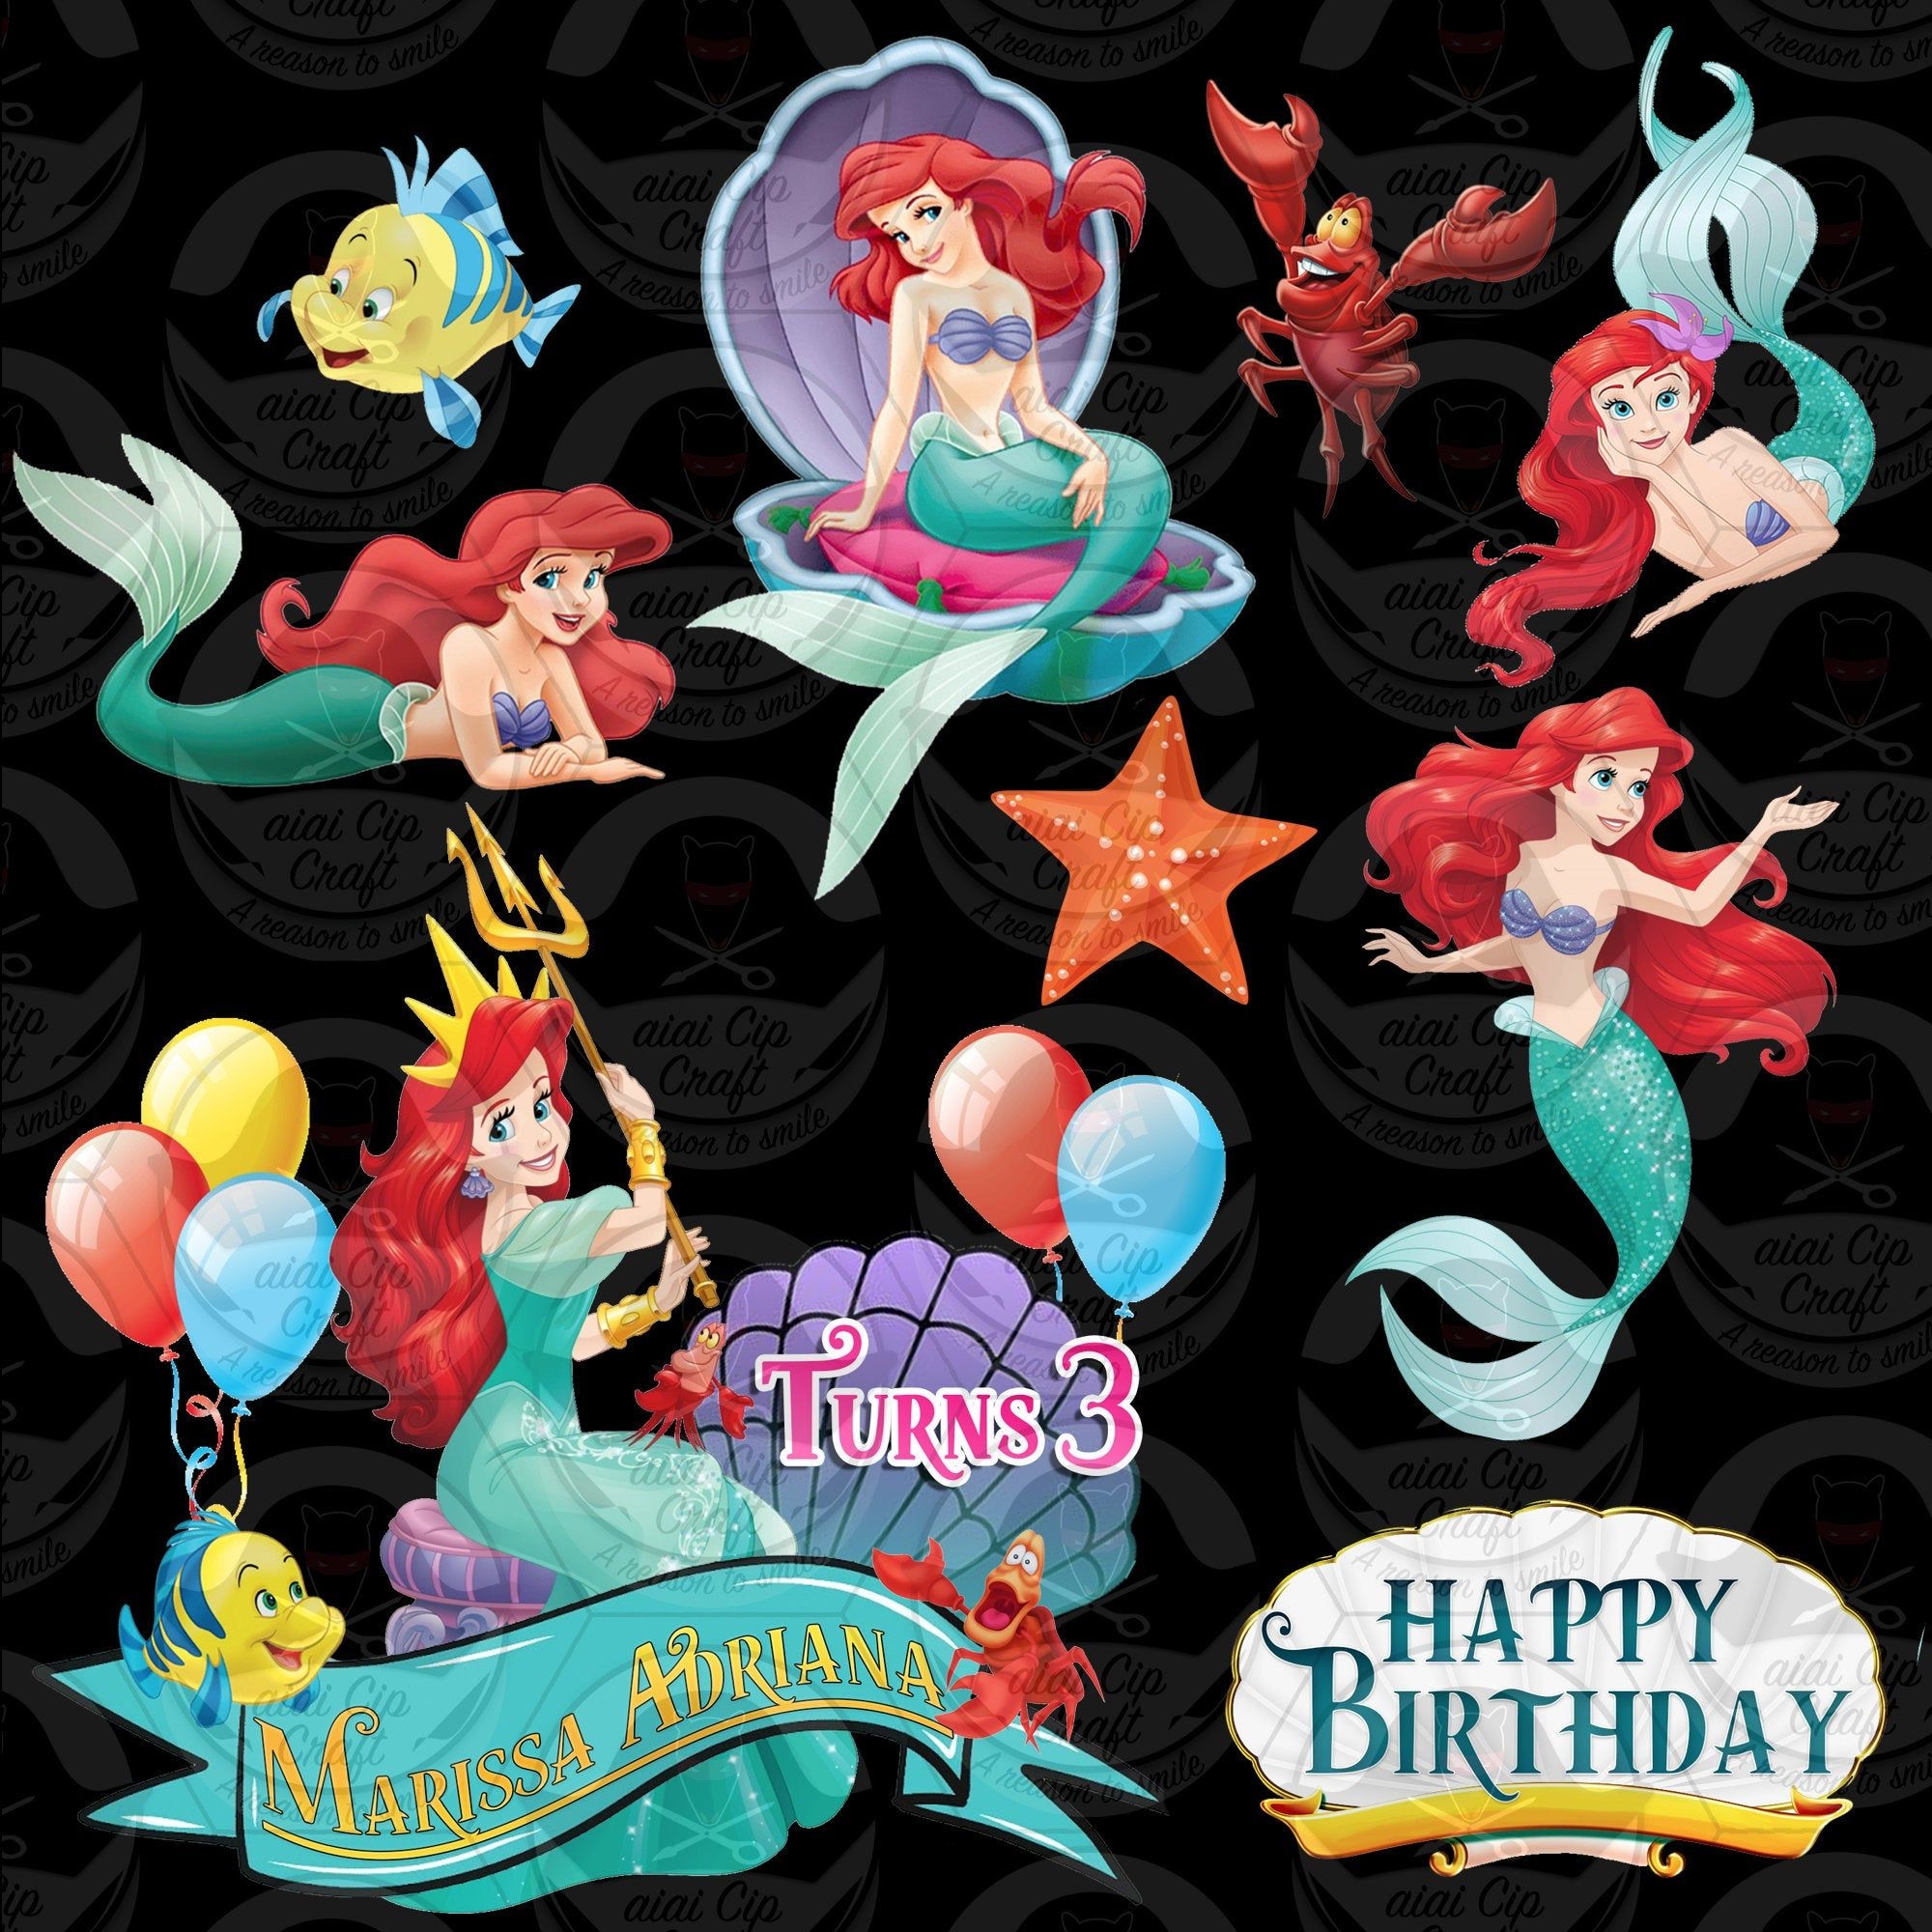 Custom The Little Mermaid Cake Topper Template Etsy Mermaid Cake Topper Little Mermaid Cake Topper Mermaid Happy Birthday